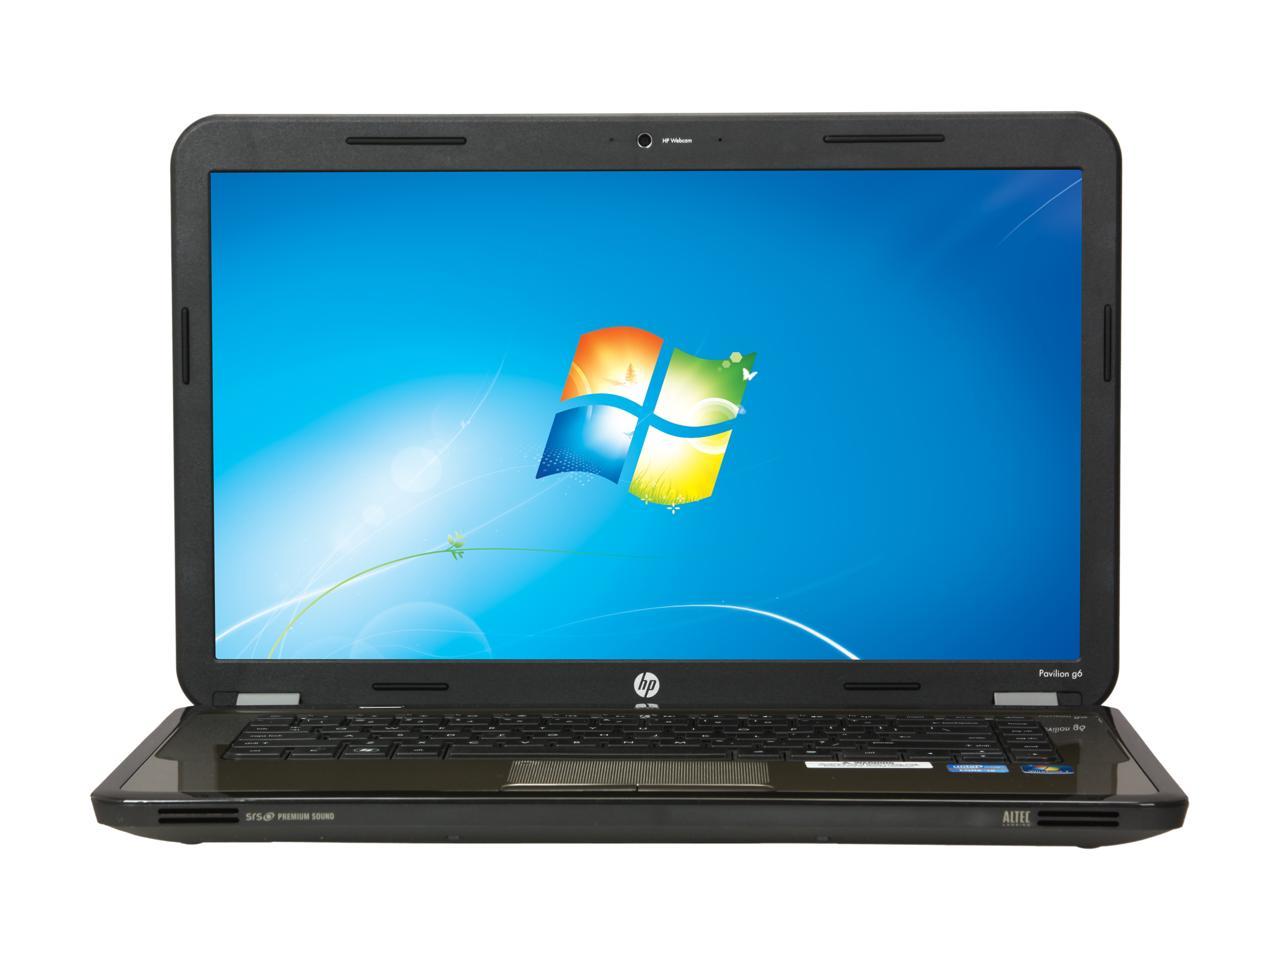 Refurbished: HP Laptop Pavilion g6-1c57dx Intel Core i5 2nd Gen 2430M